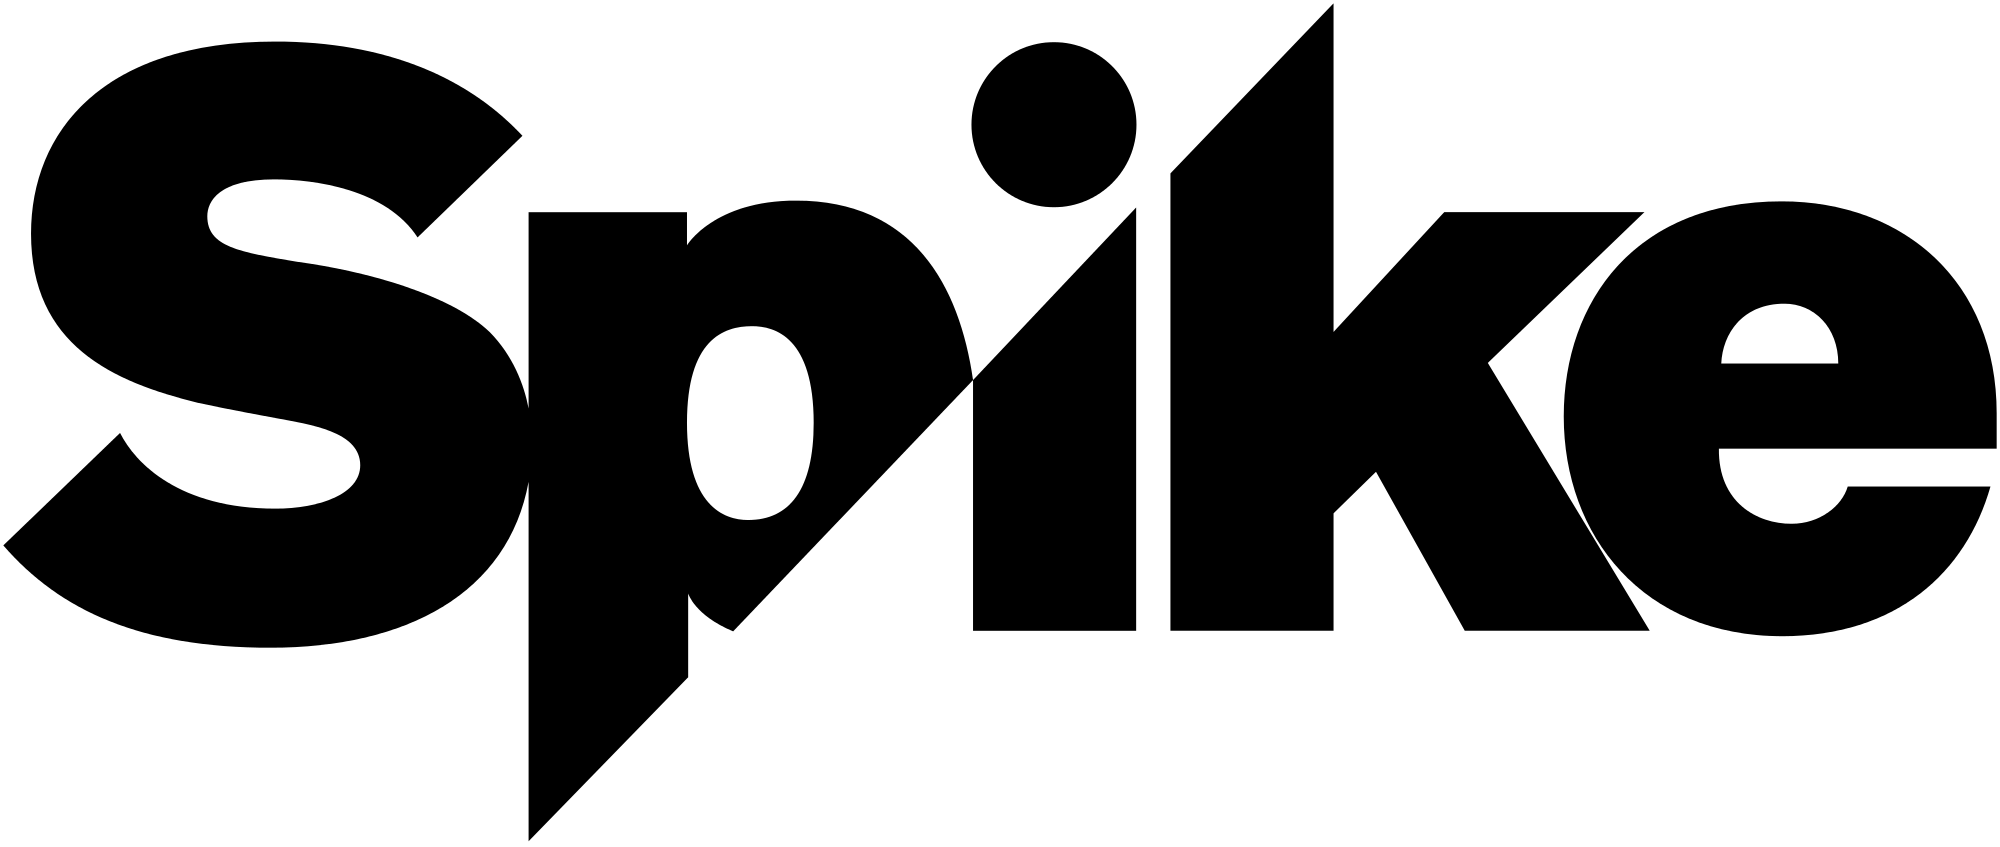 Spike Logo - Spike logo 2015.svg